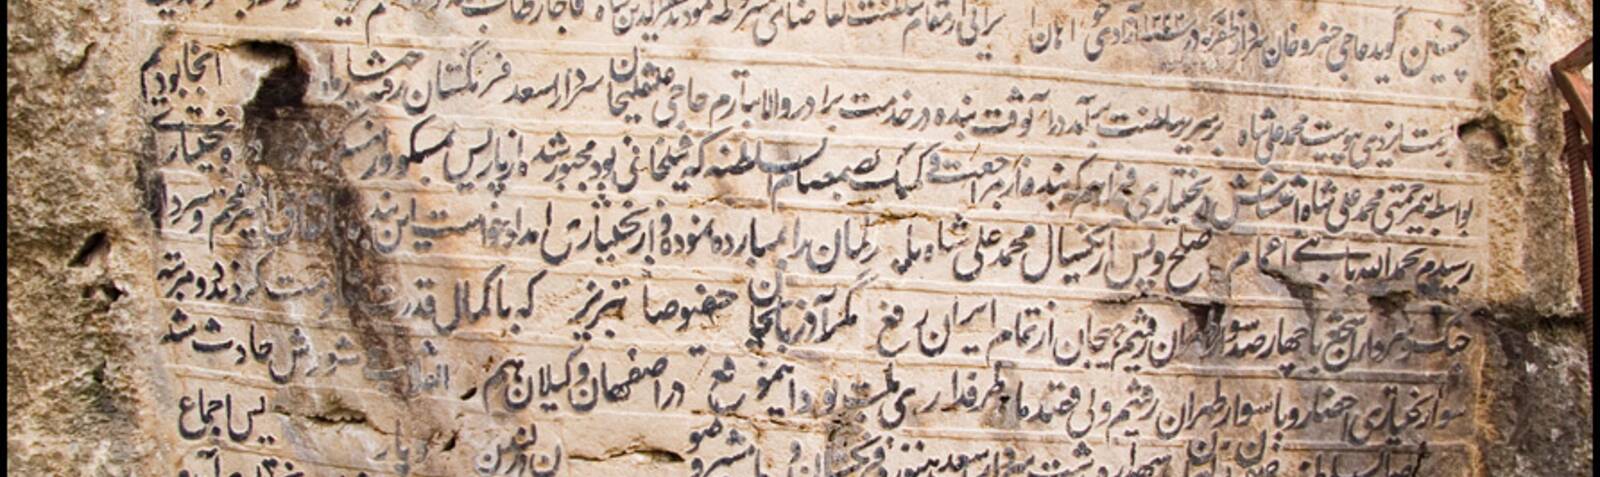 Pir-e Ghar Inscriptions 